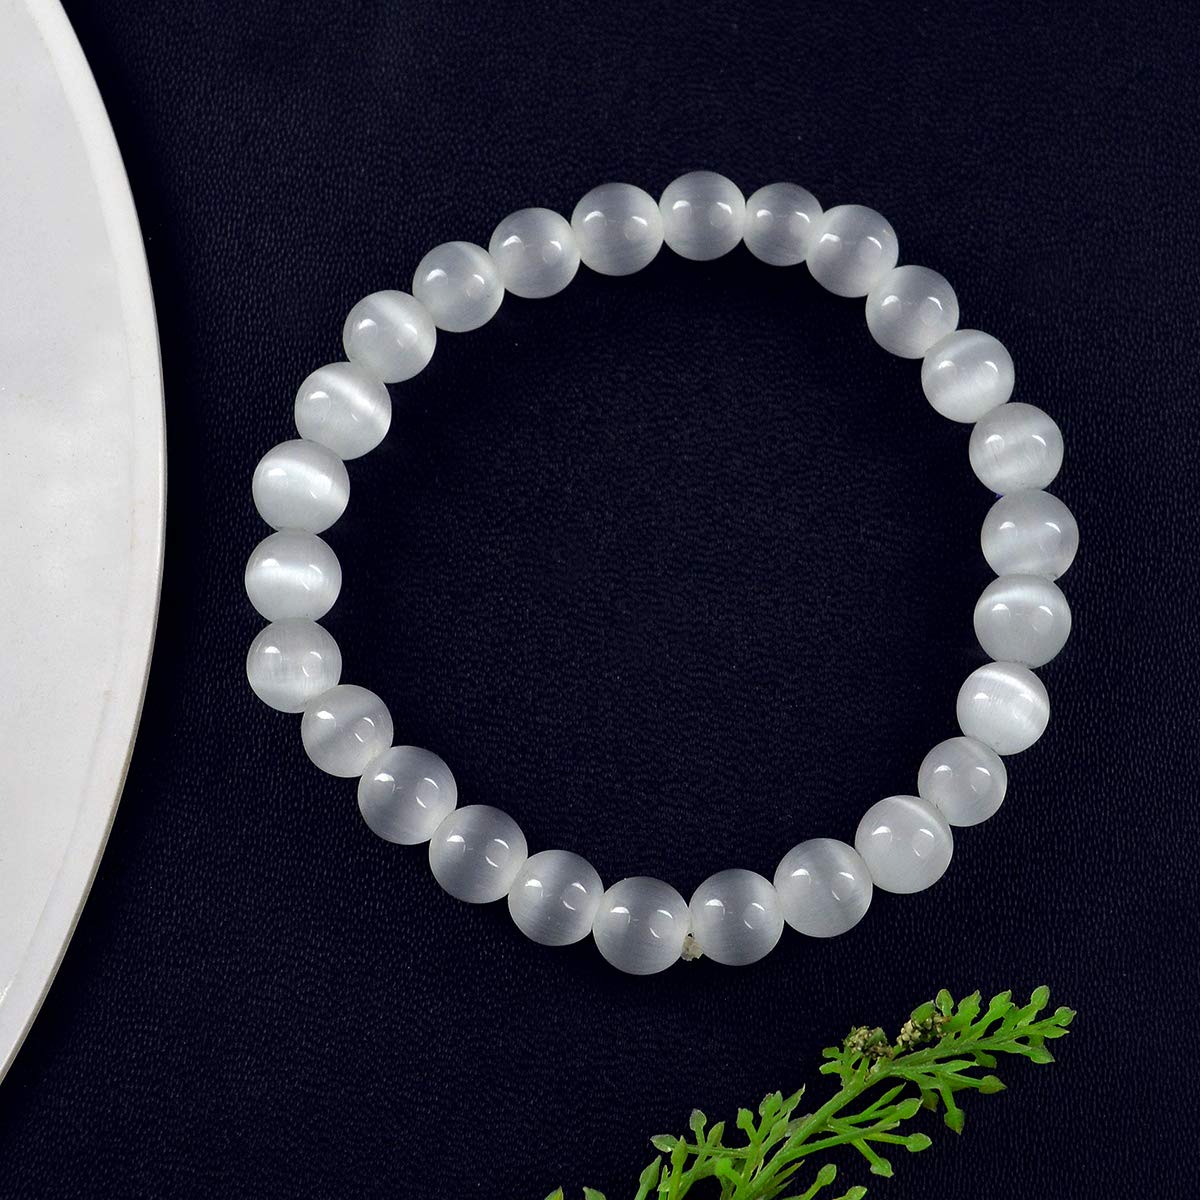 Healing Crystals - Wholesale White Selenite Bracelet